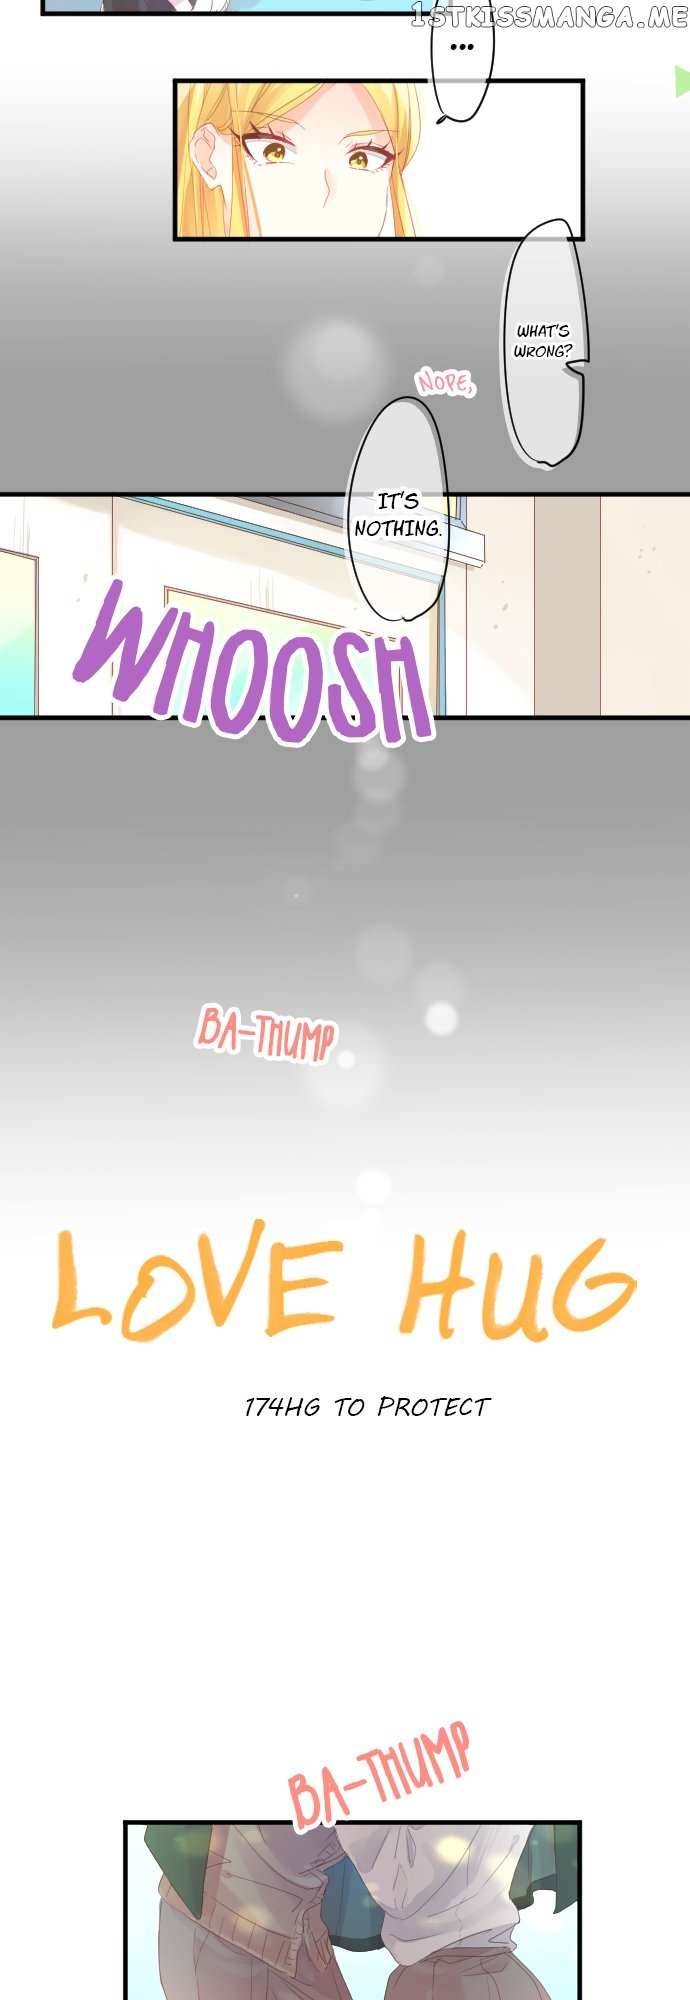 Love Hug - chapter 174 - #5